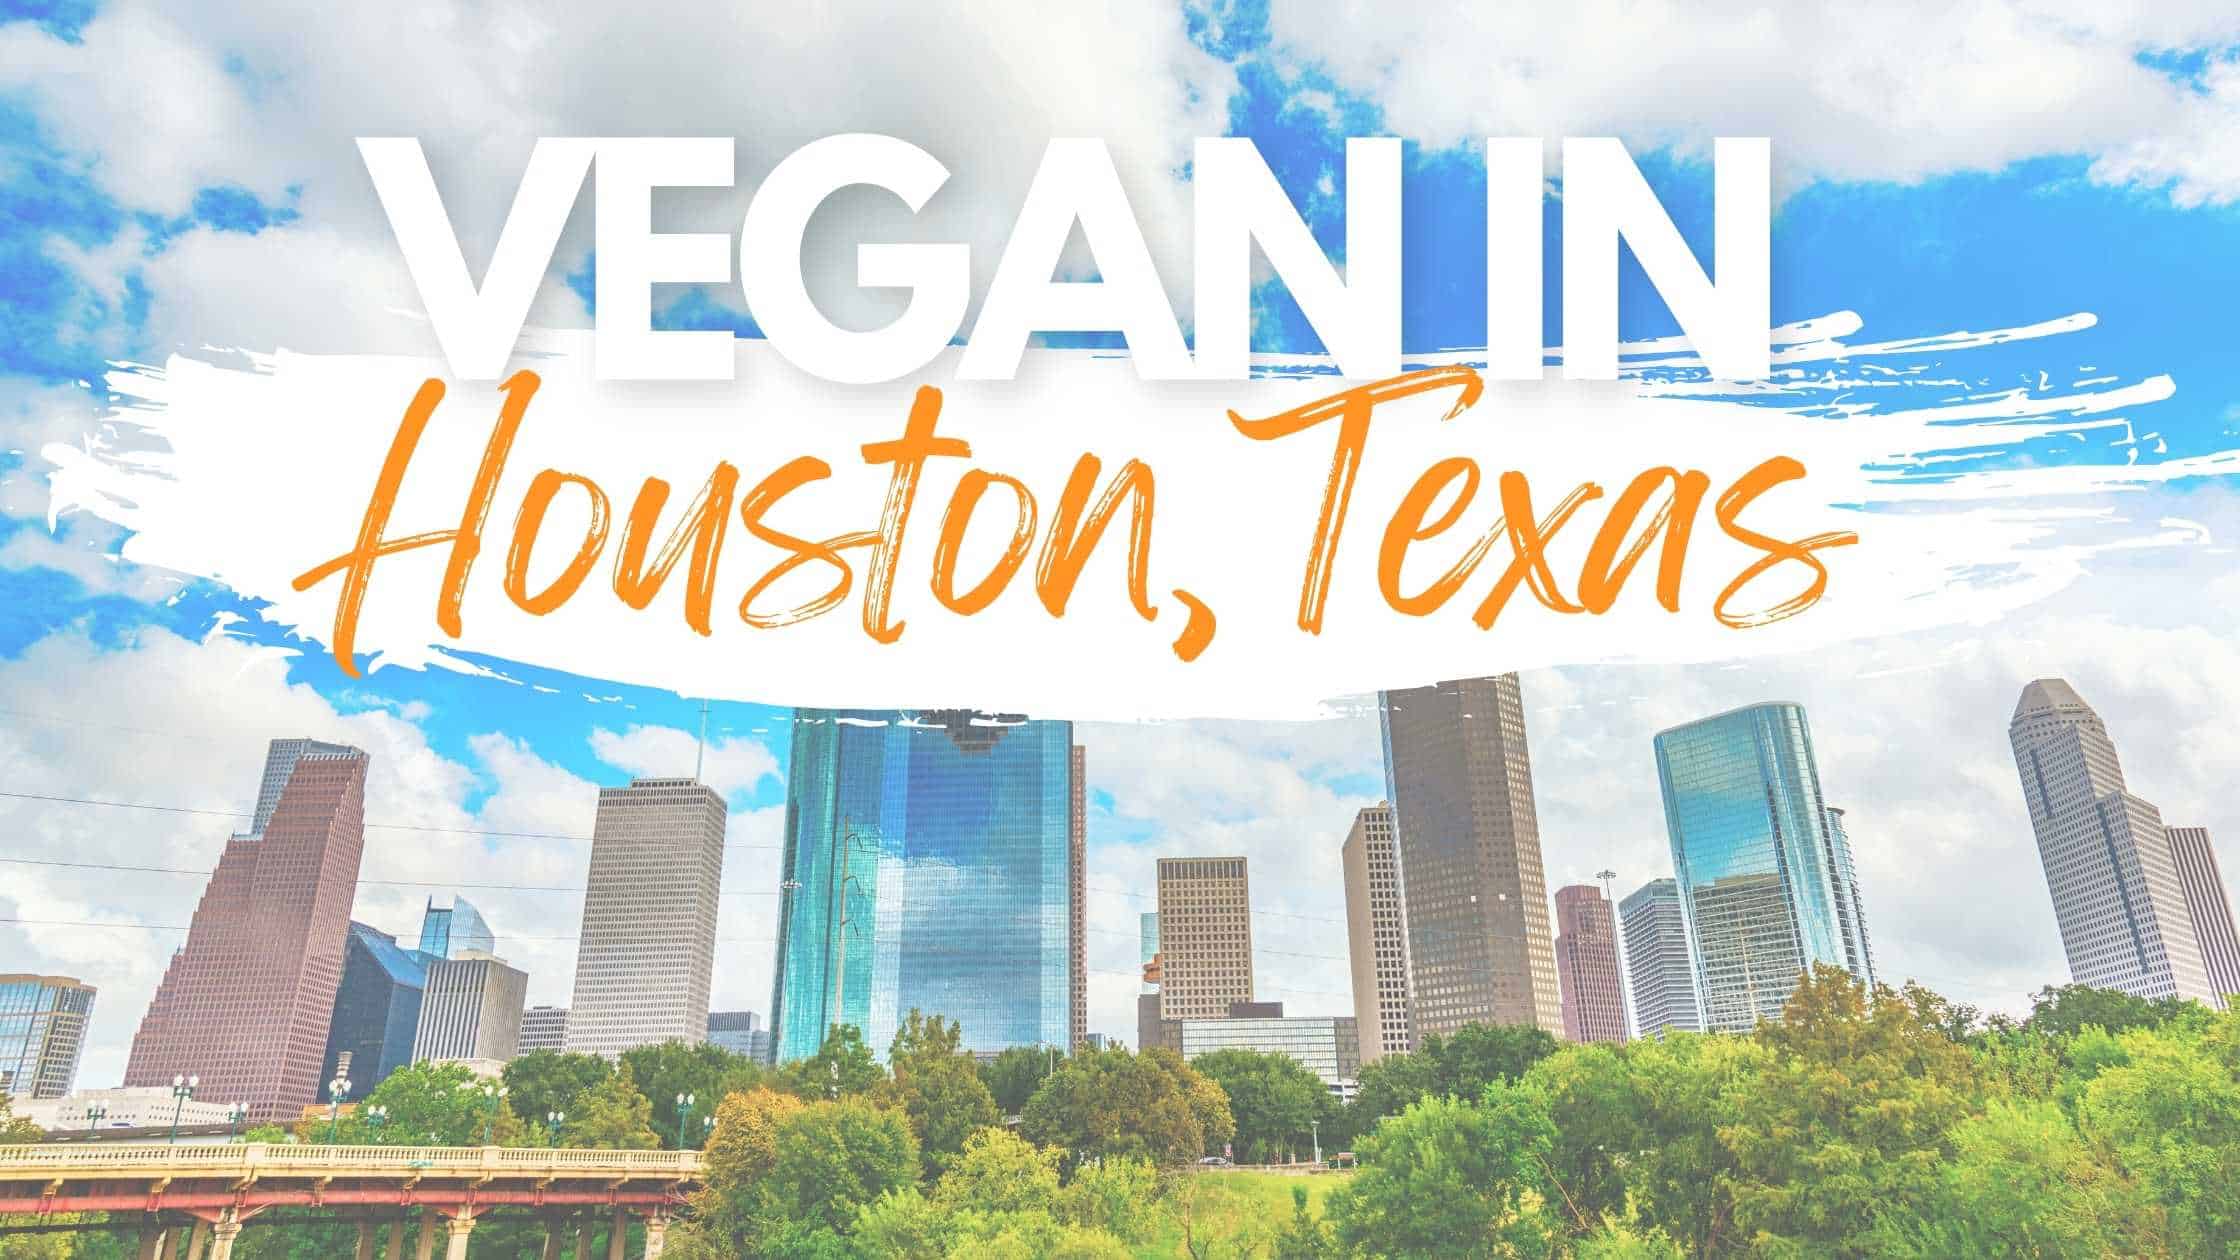 Vegan restaurants in Houston, Texas.